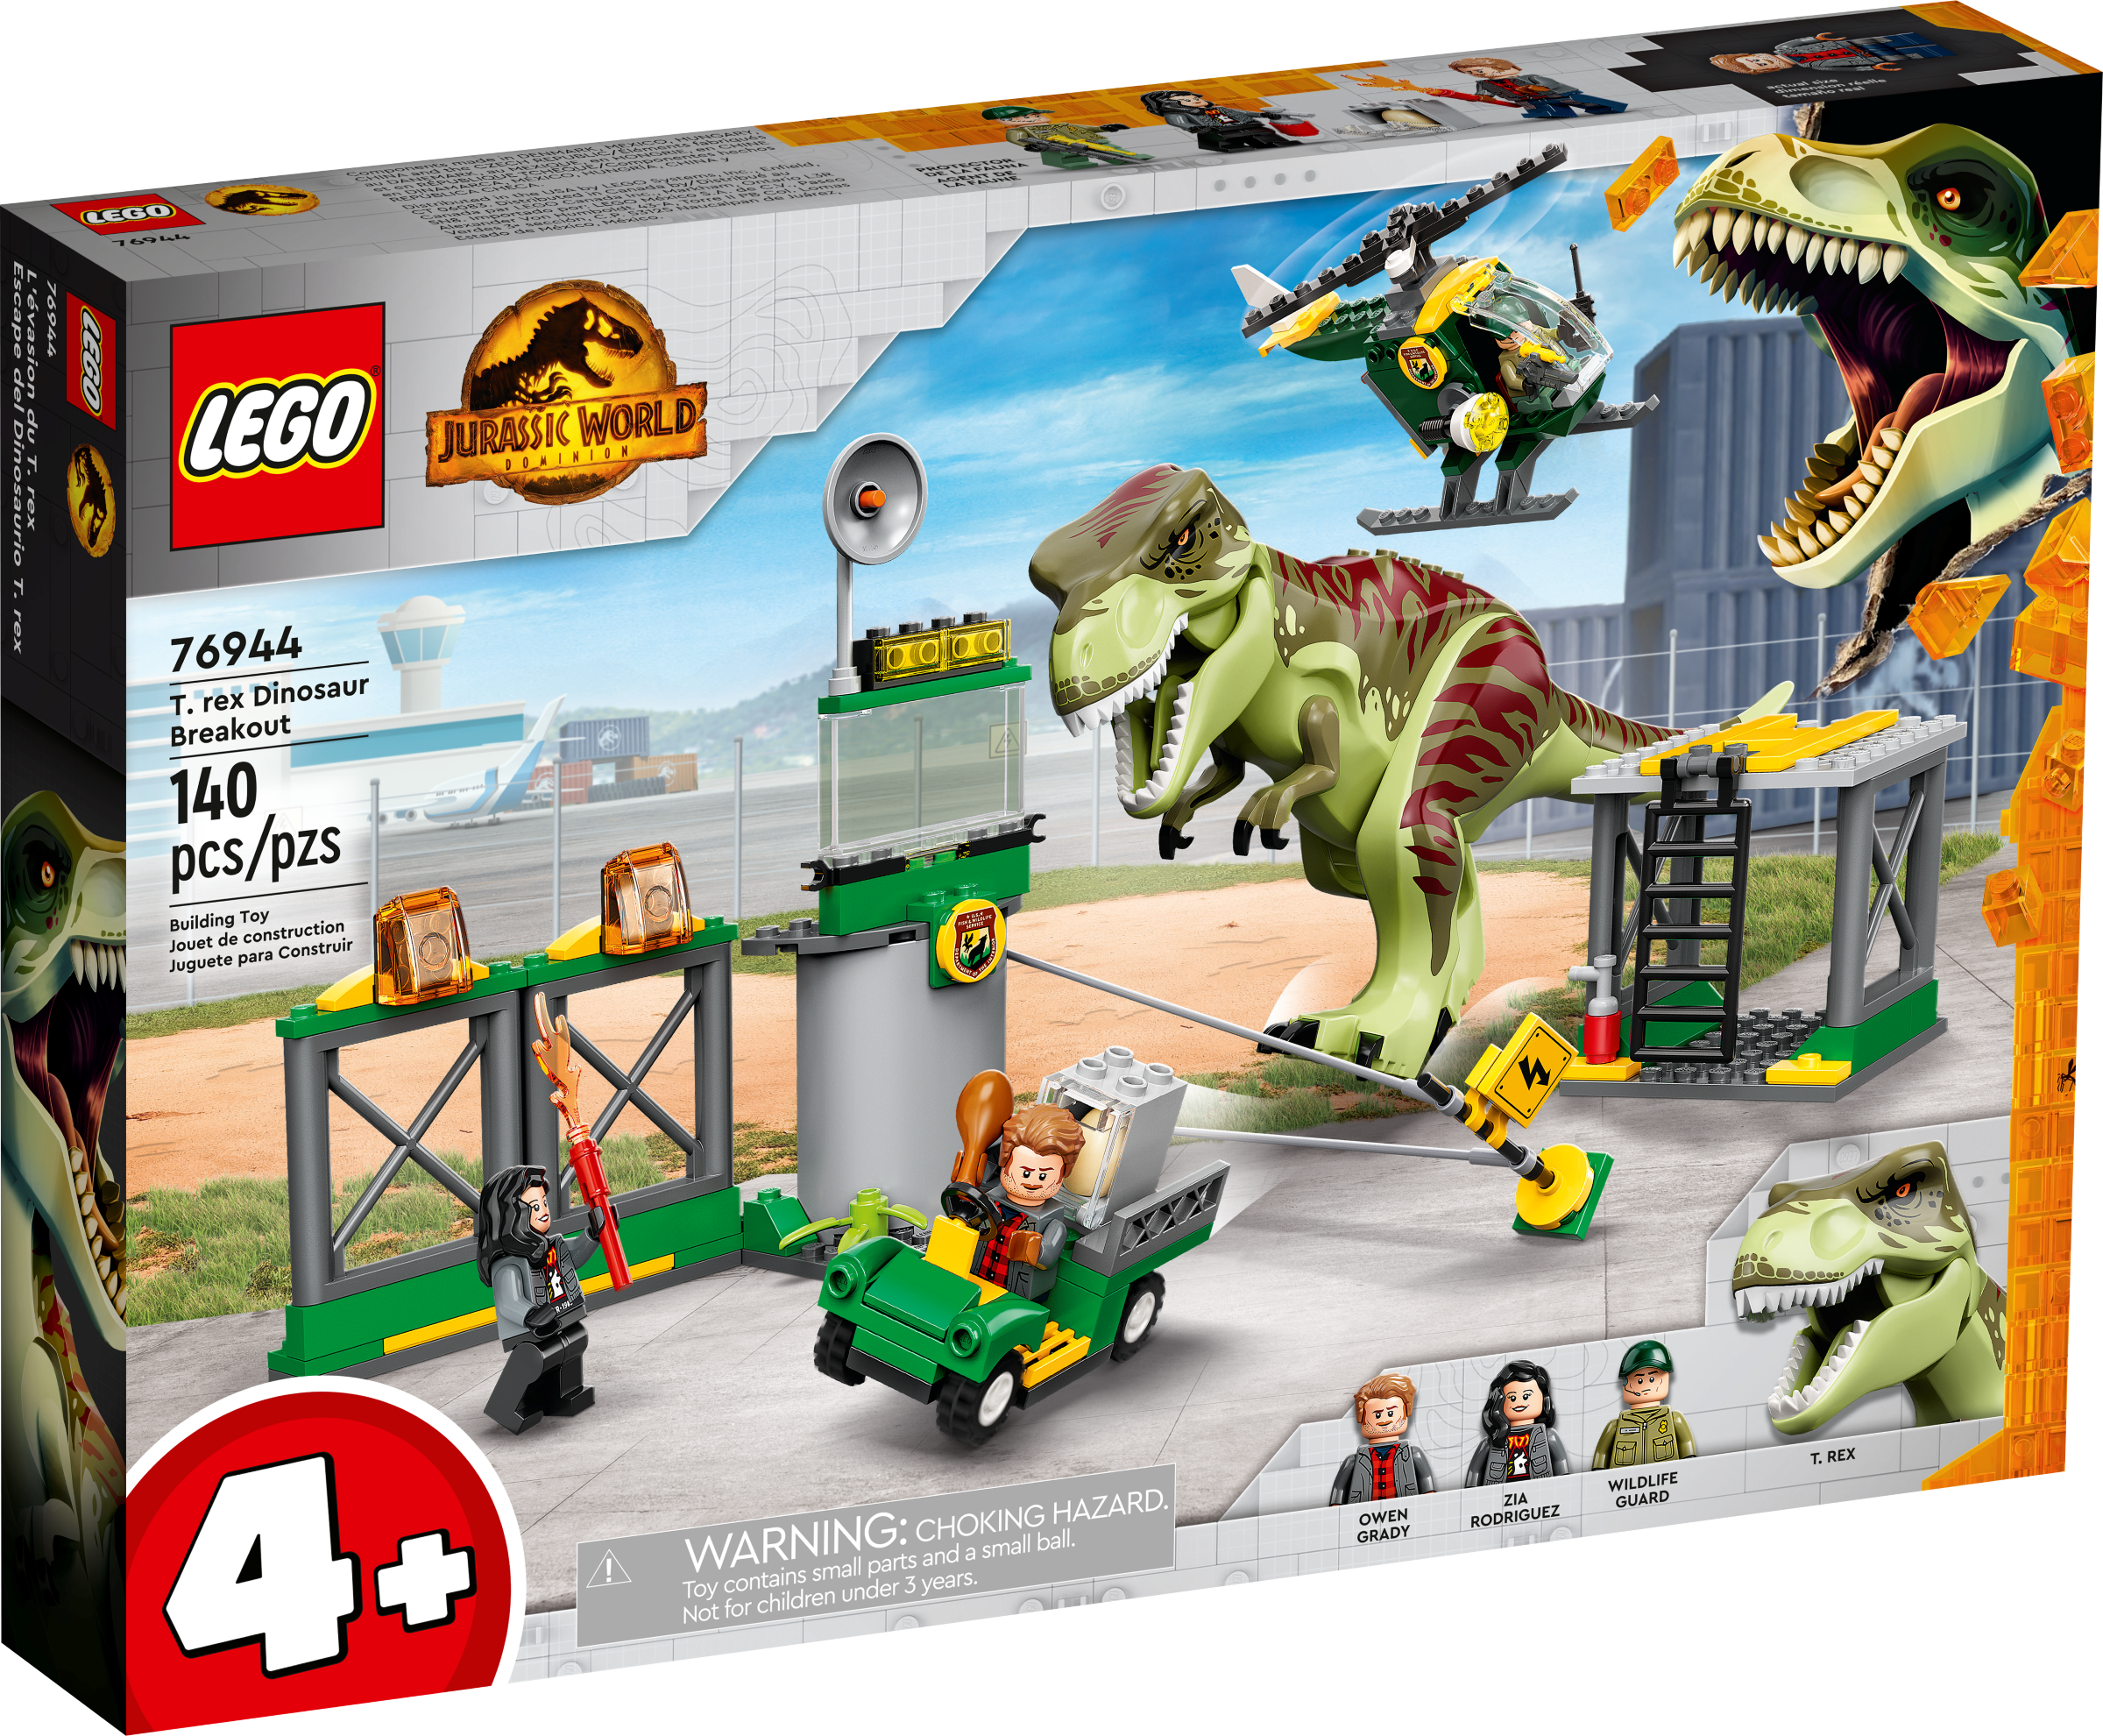 Dinosaur Rex Tyrannosaurus Jurassic World Park Mini Figures Toys With Lego New 